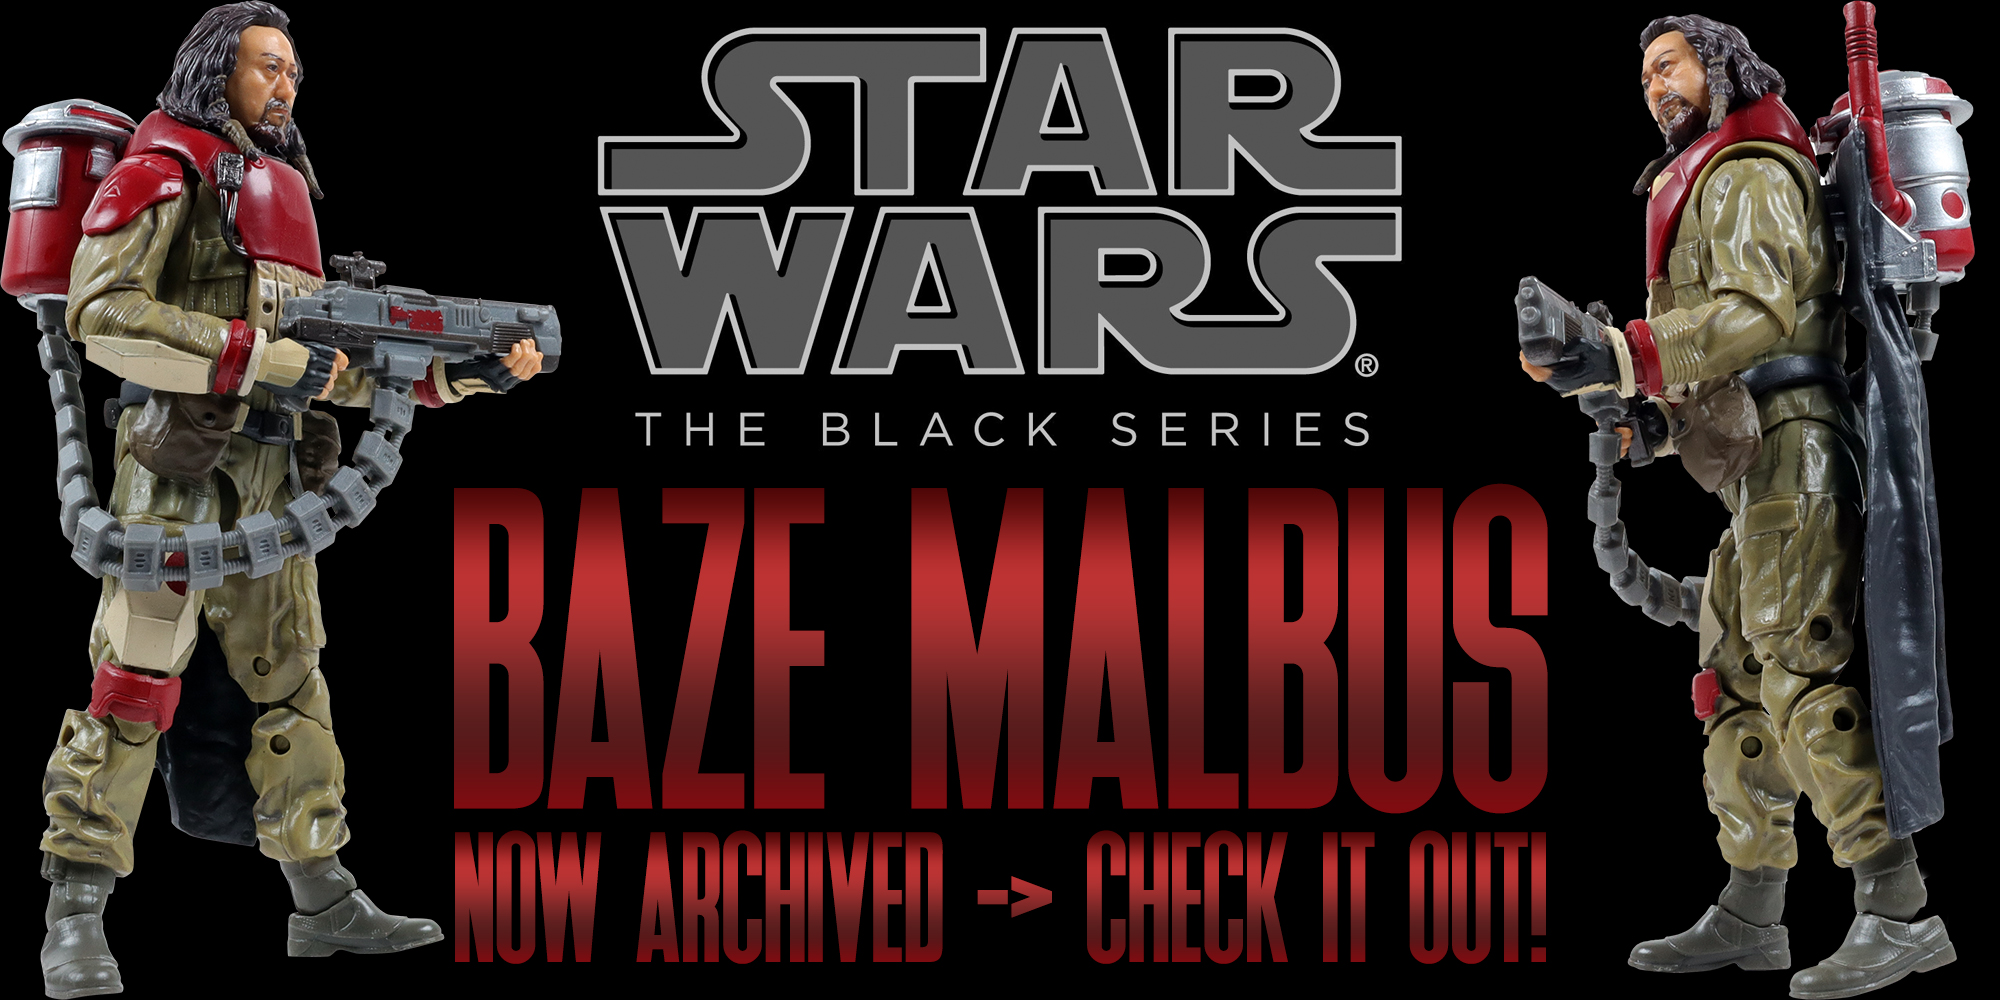 Black Series Baze Malbus